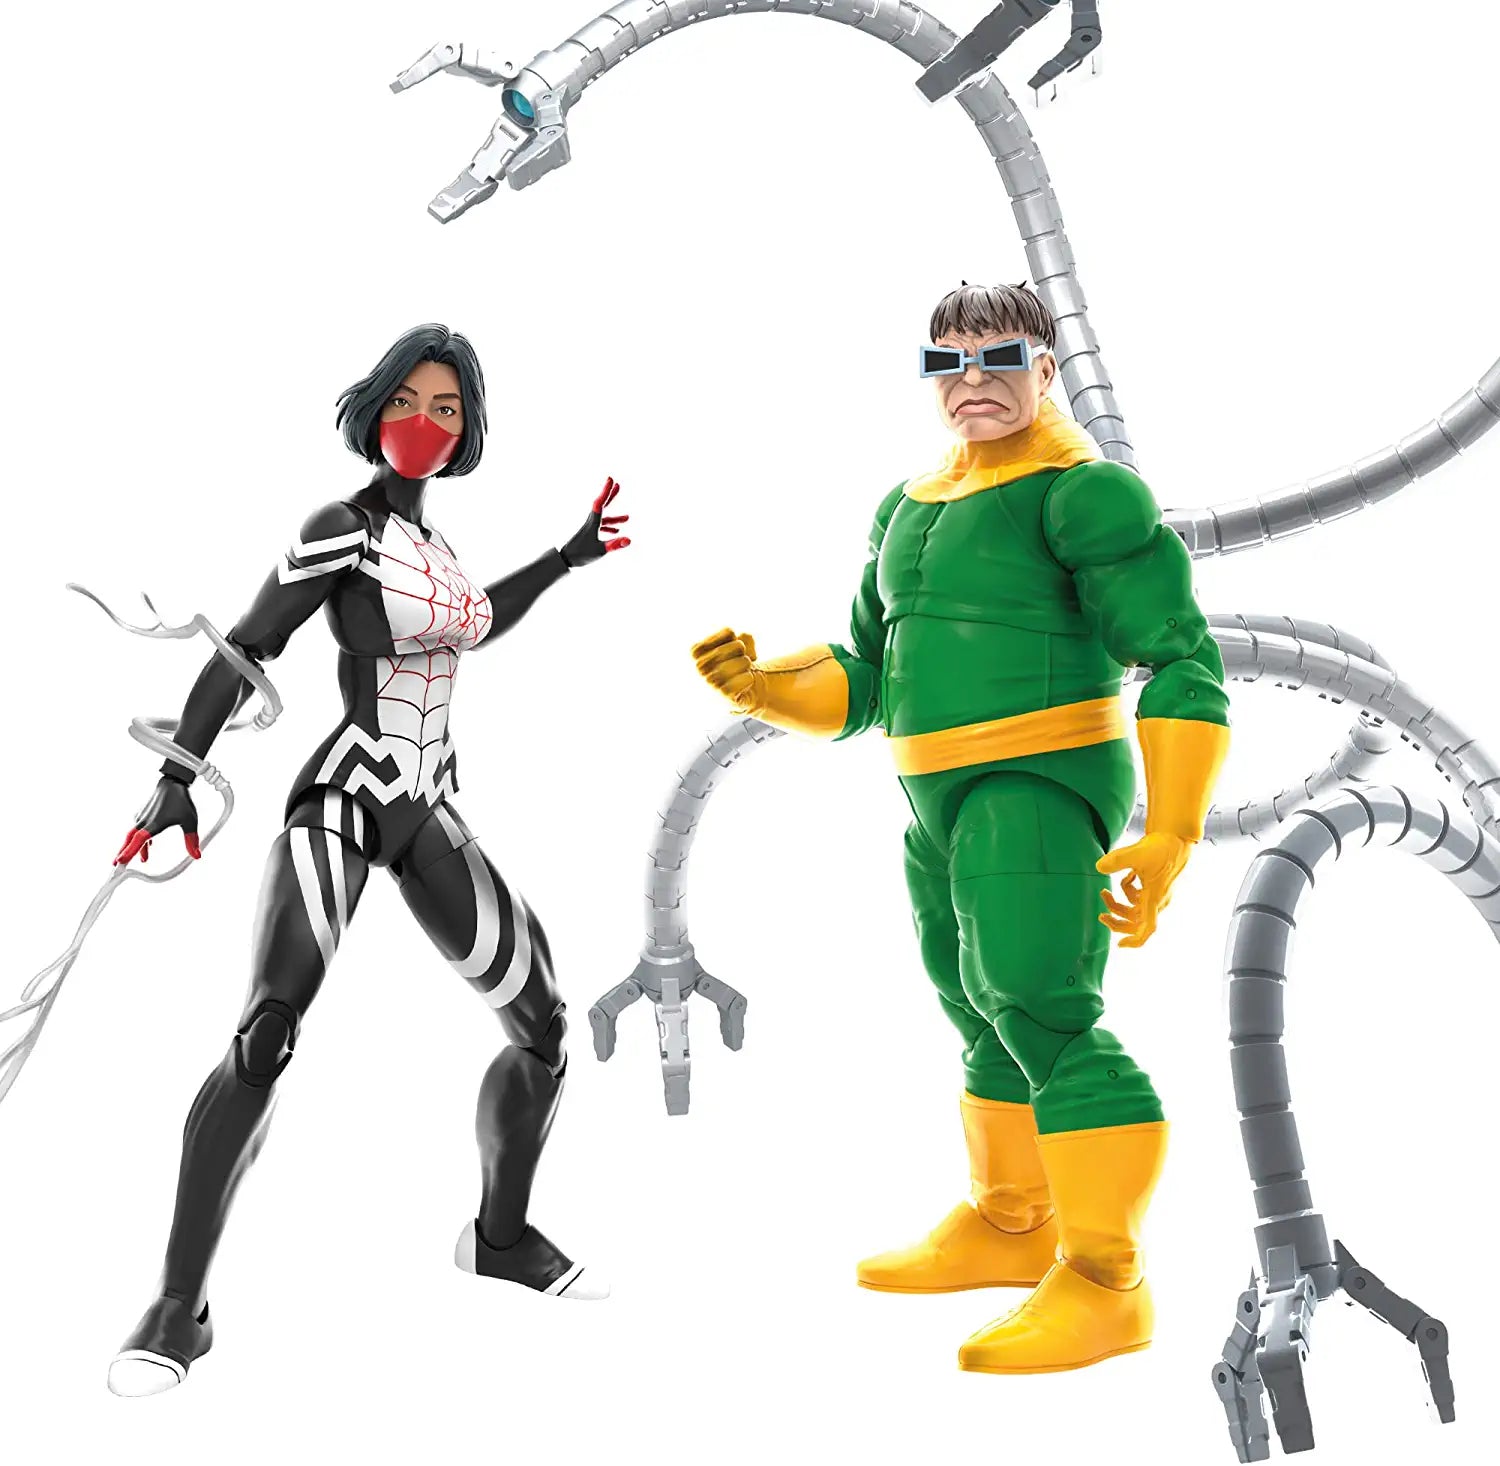 Marvel Legend Marvel's Silk and Doc Ock Action Figure